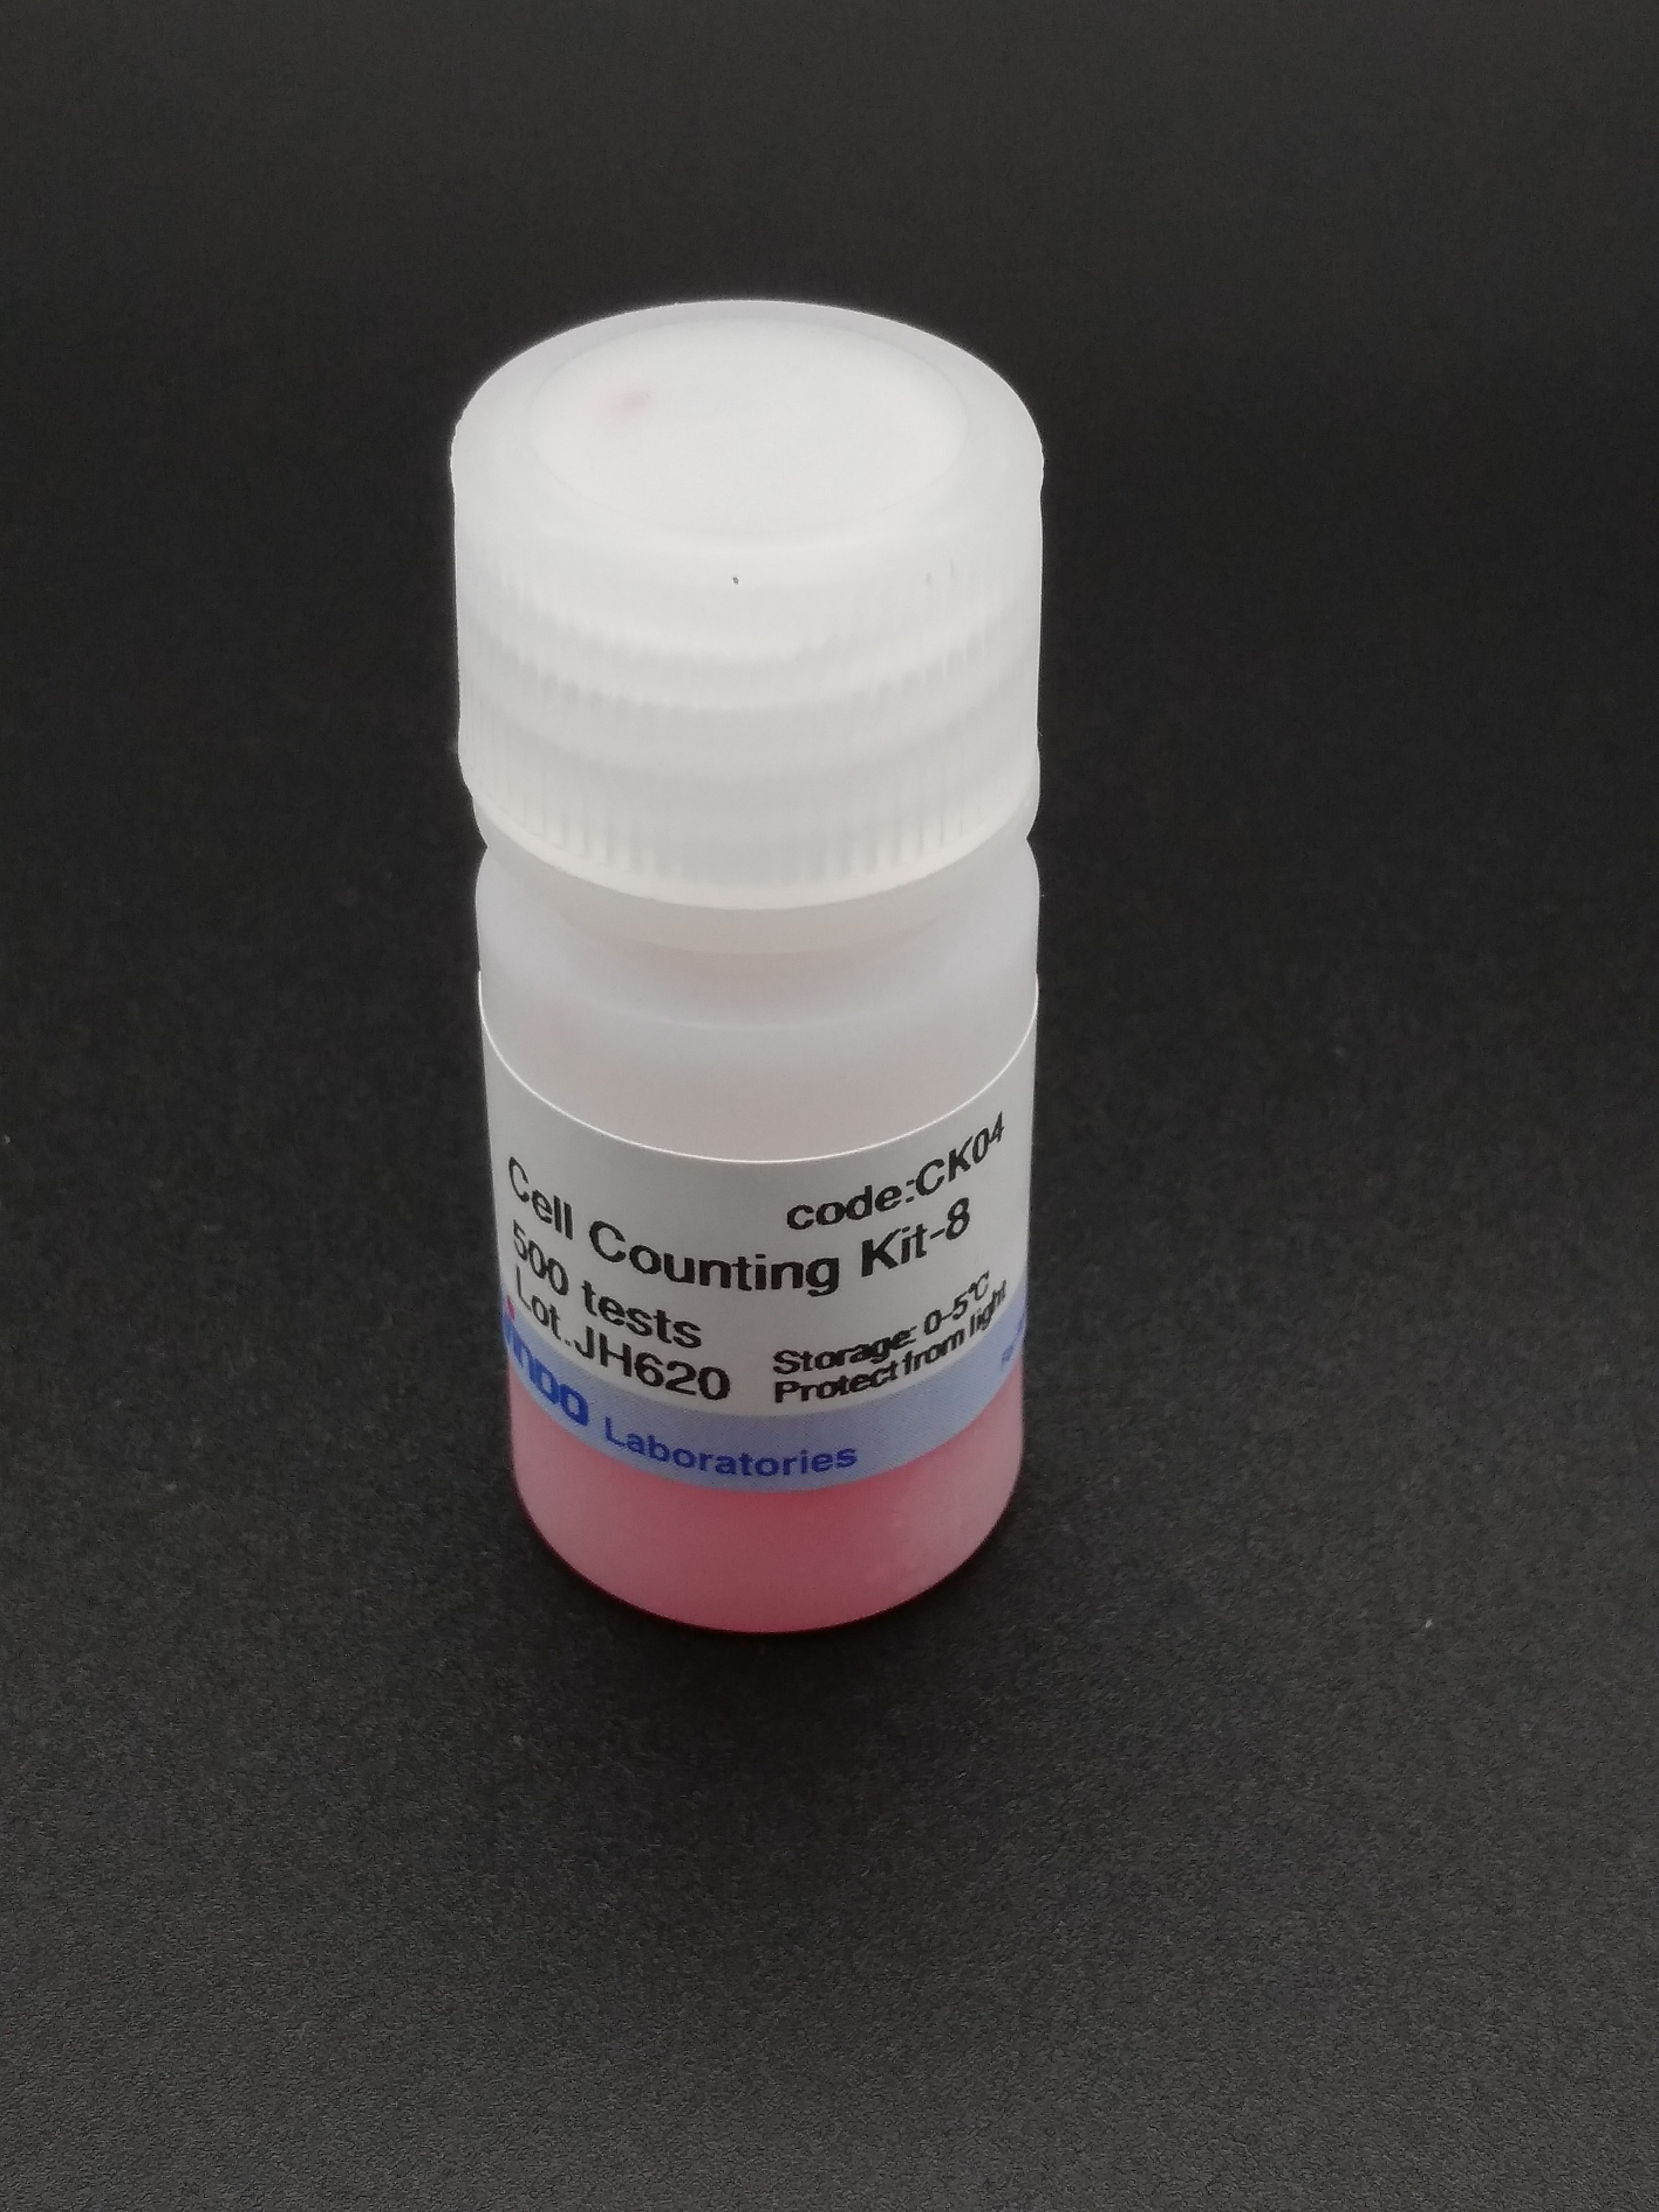 cck-8细胞增殖/毒性检测试剂